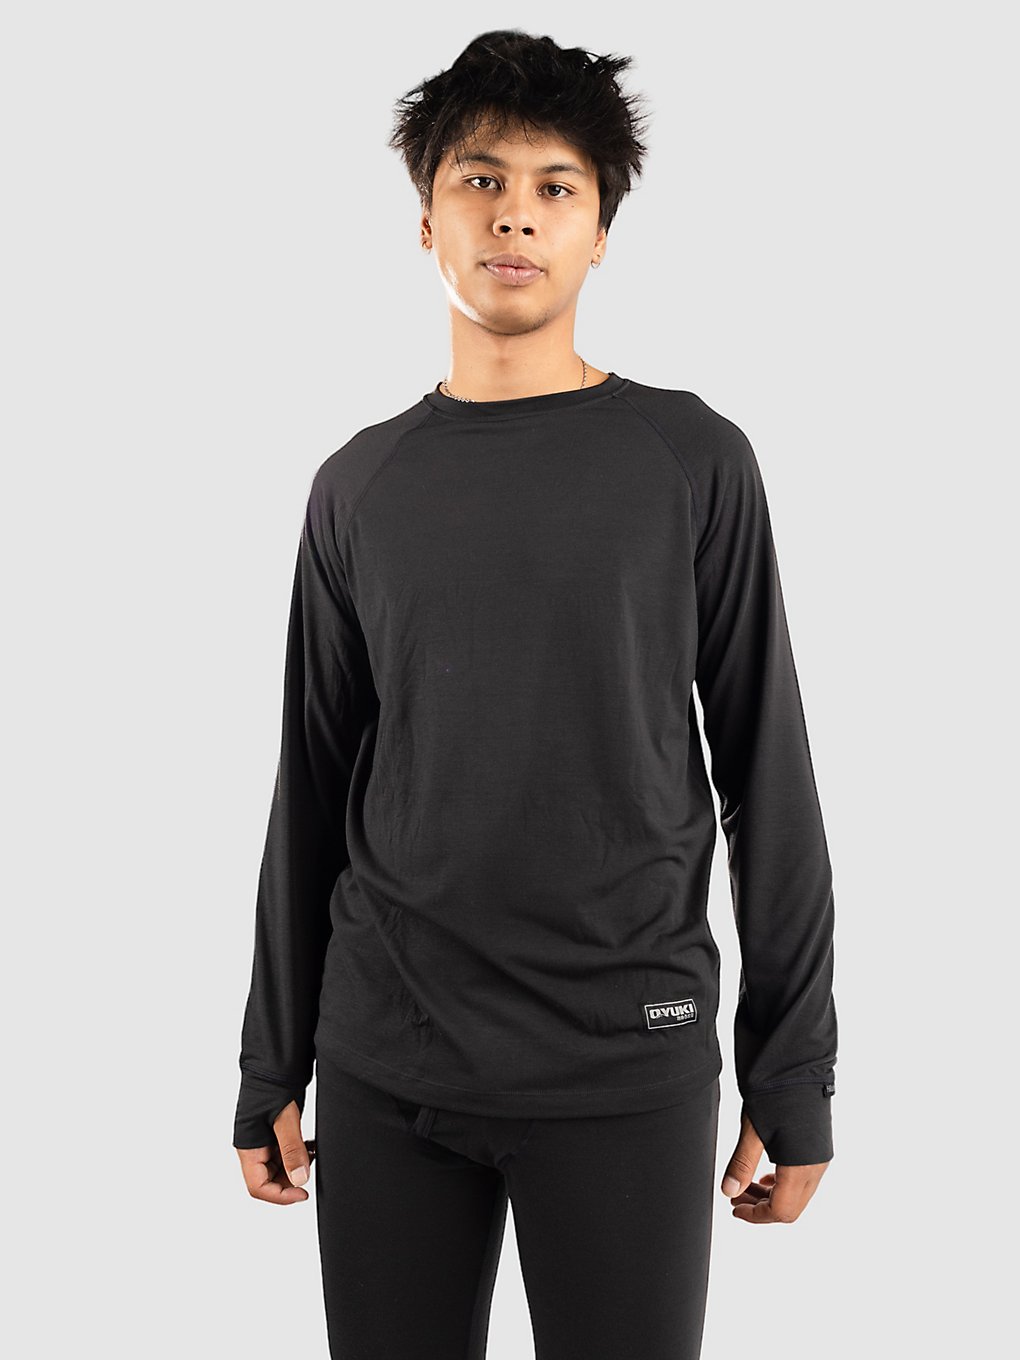 Oyuki Hitatech Long Sleeve Funktionsshirt black kaufen